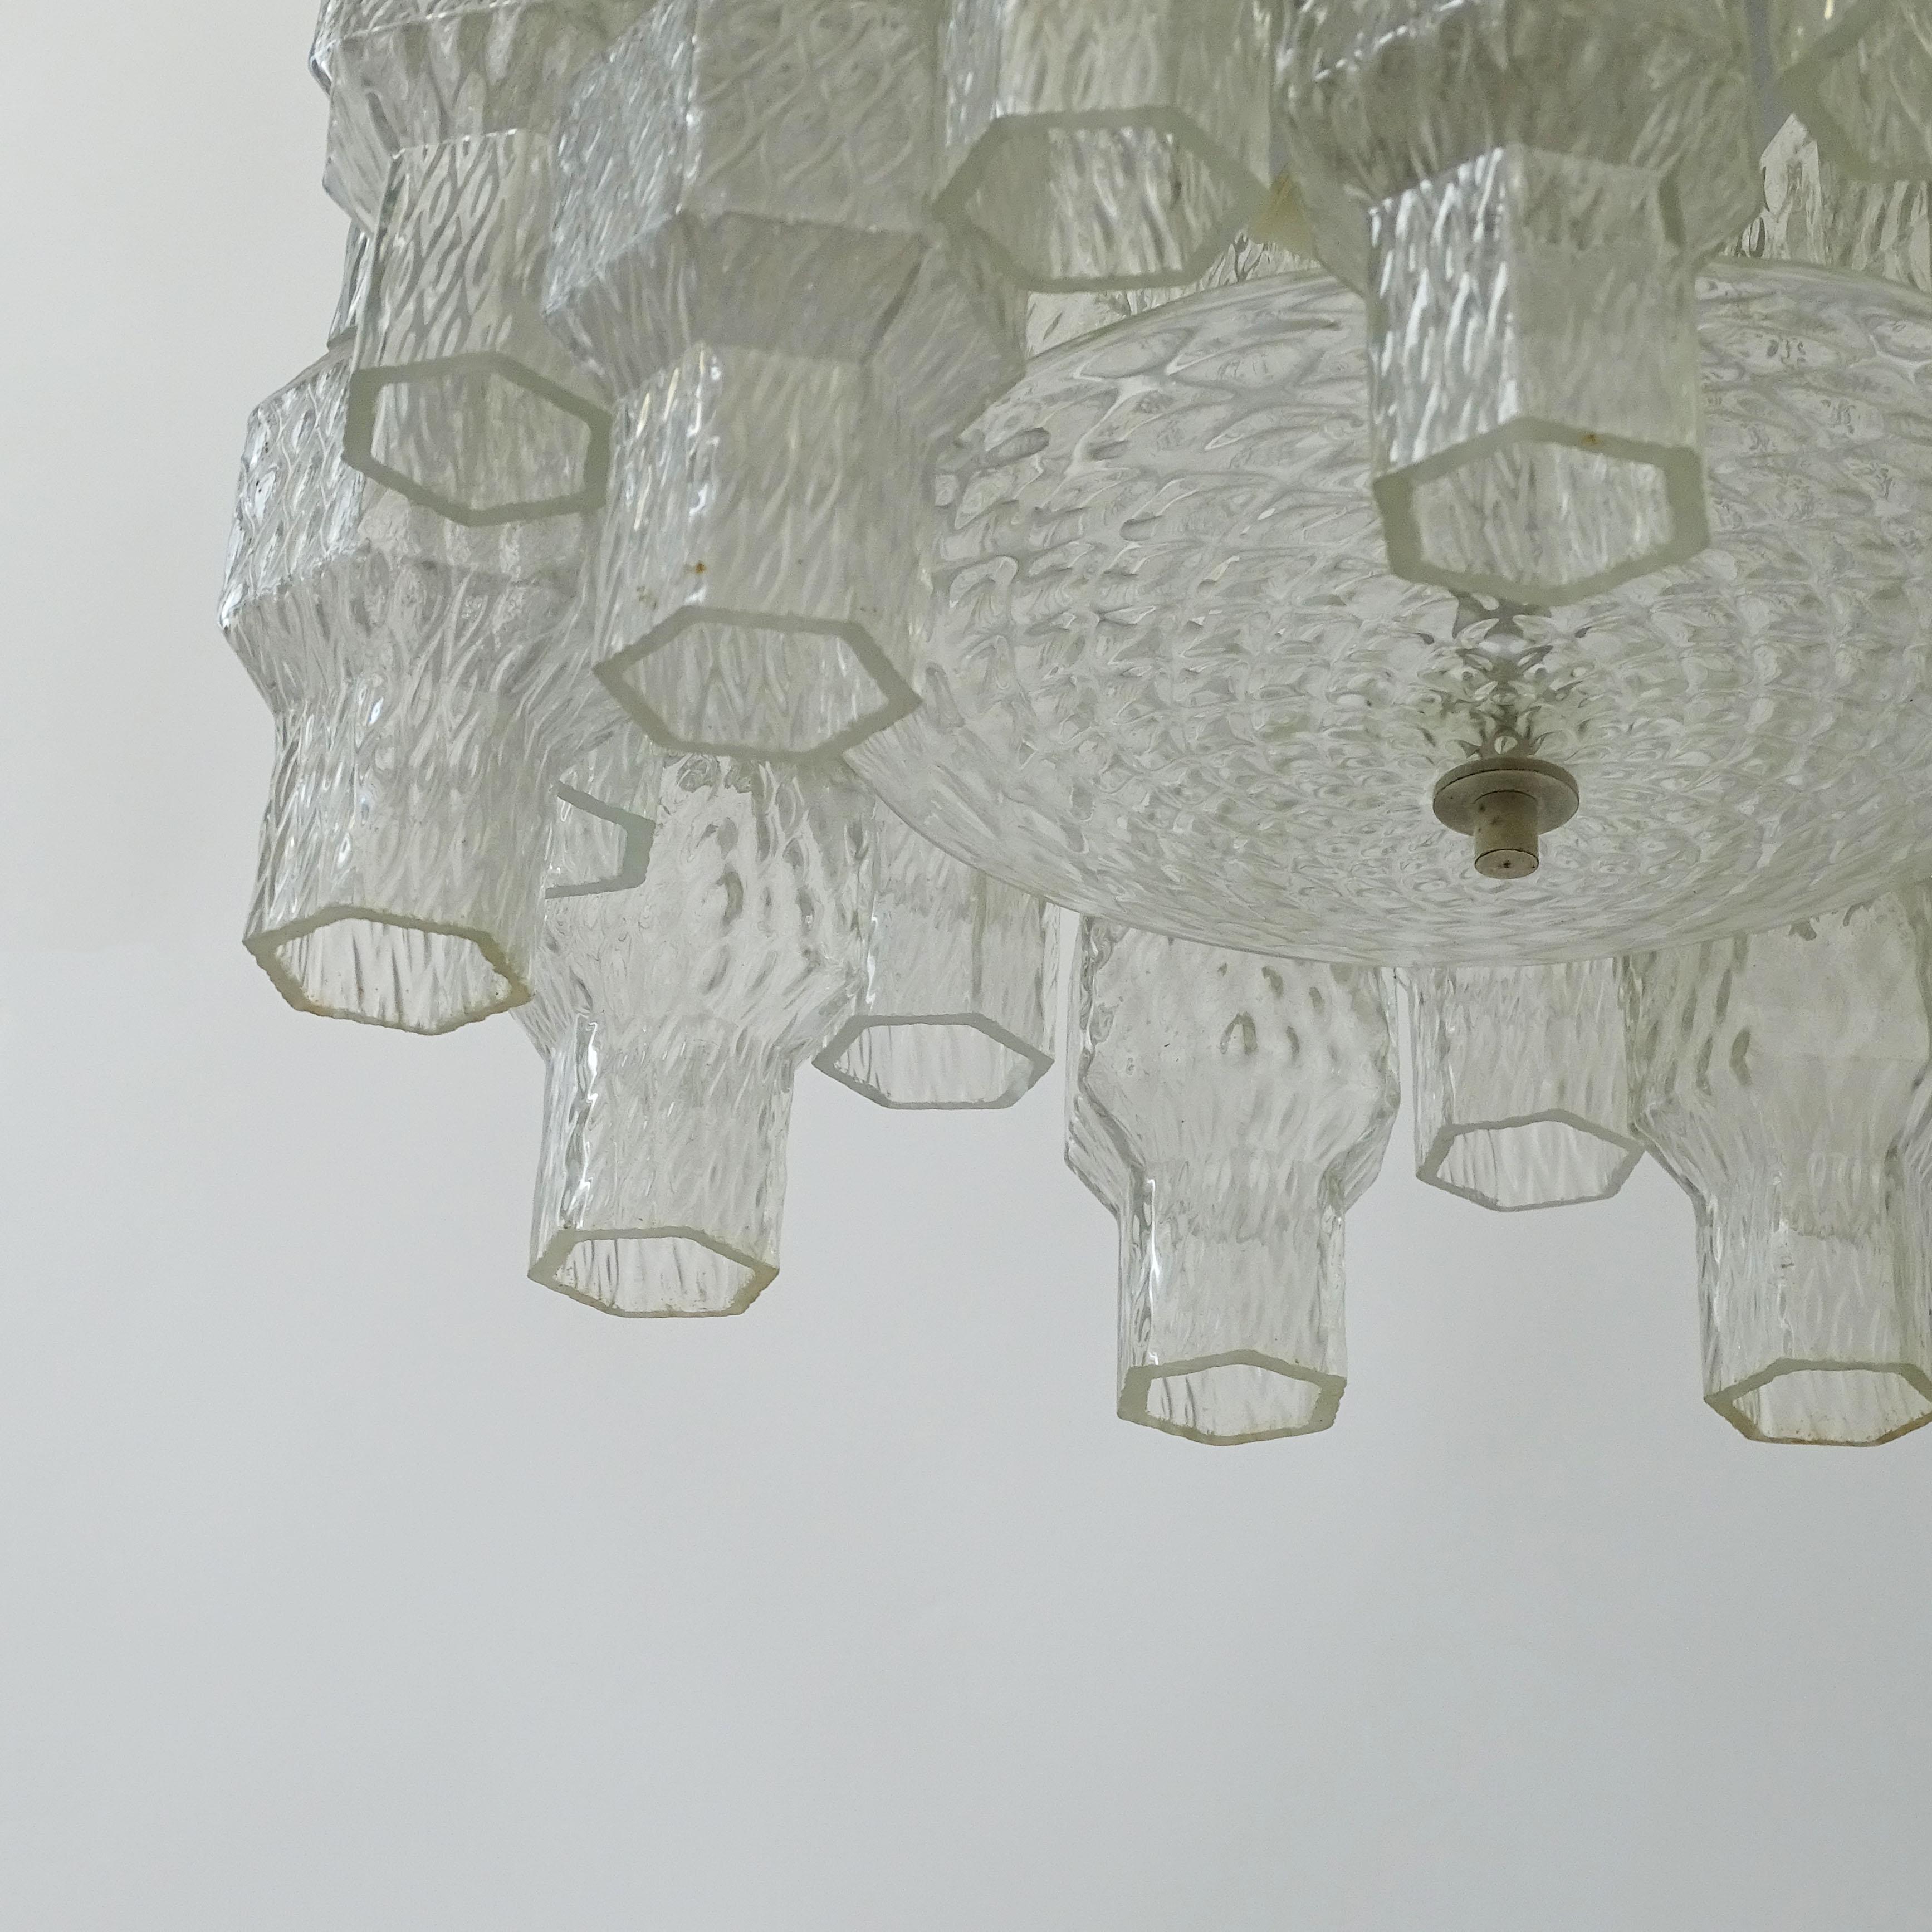 Splendid Archimede Seguso geometric-shaped murano glass ceiling lamp.
Italy 1950s